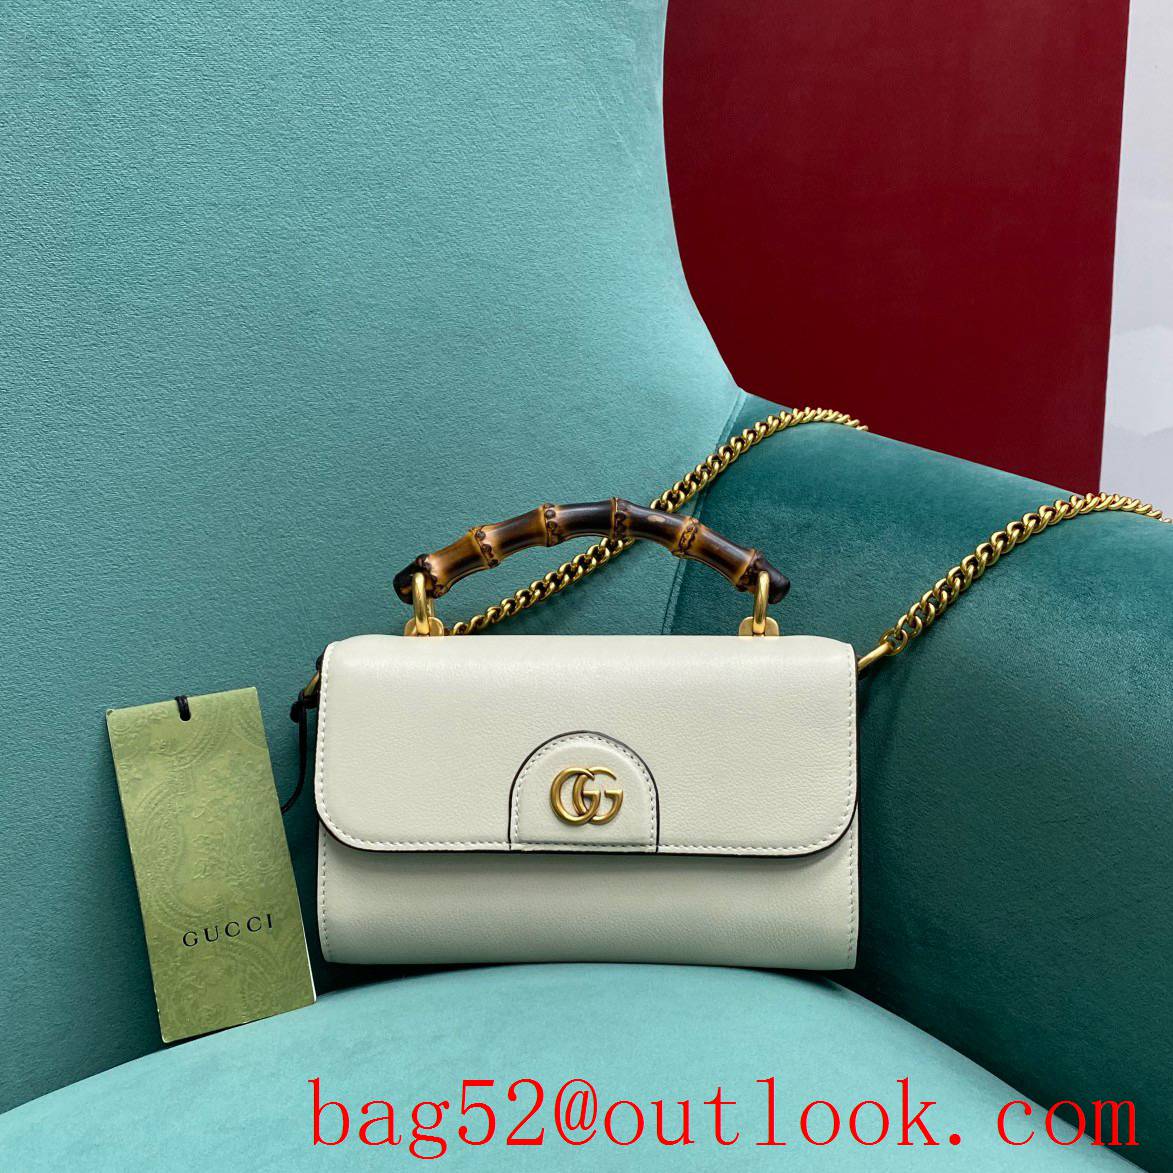 Gucci Bamboo goldchain women's white crossbody handbag